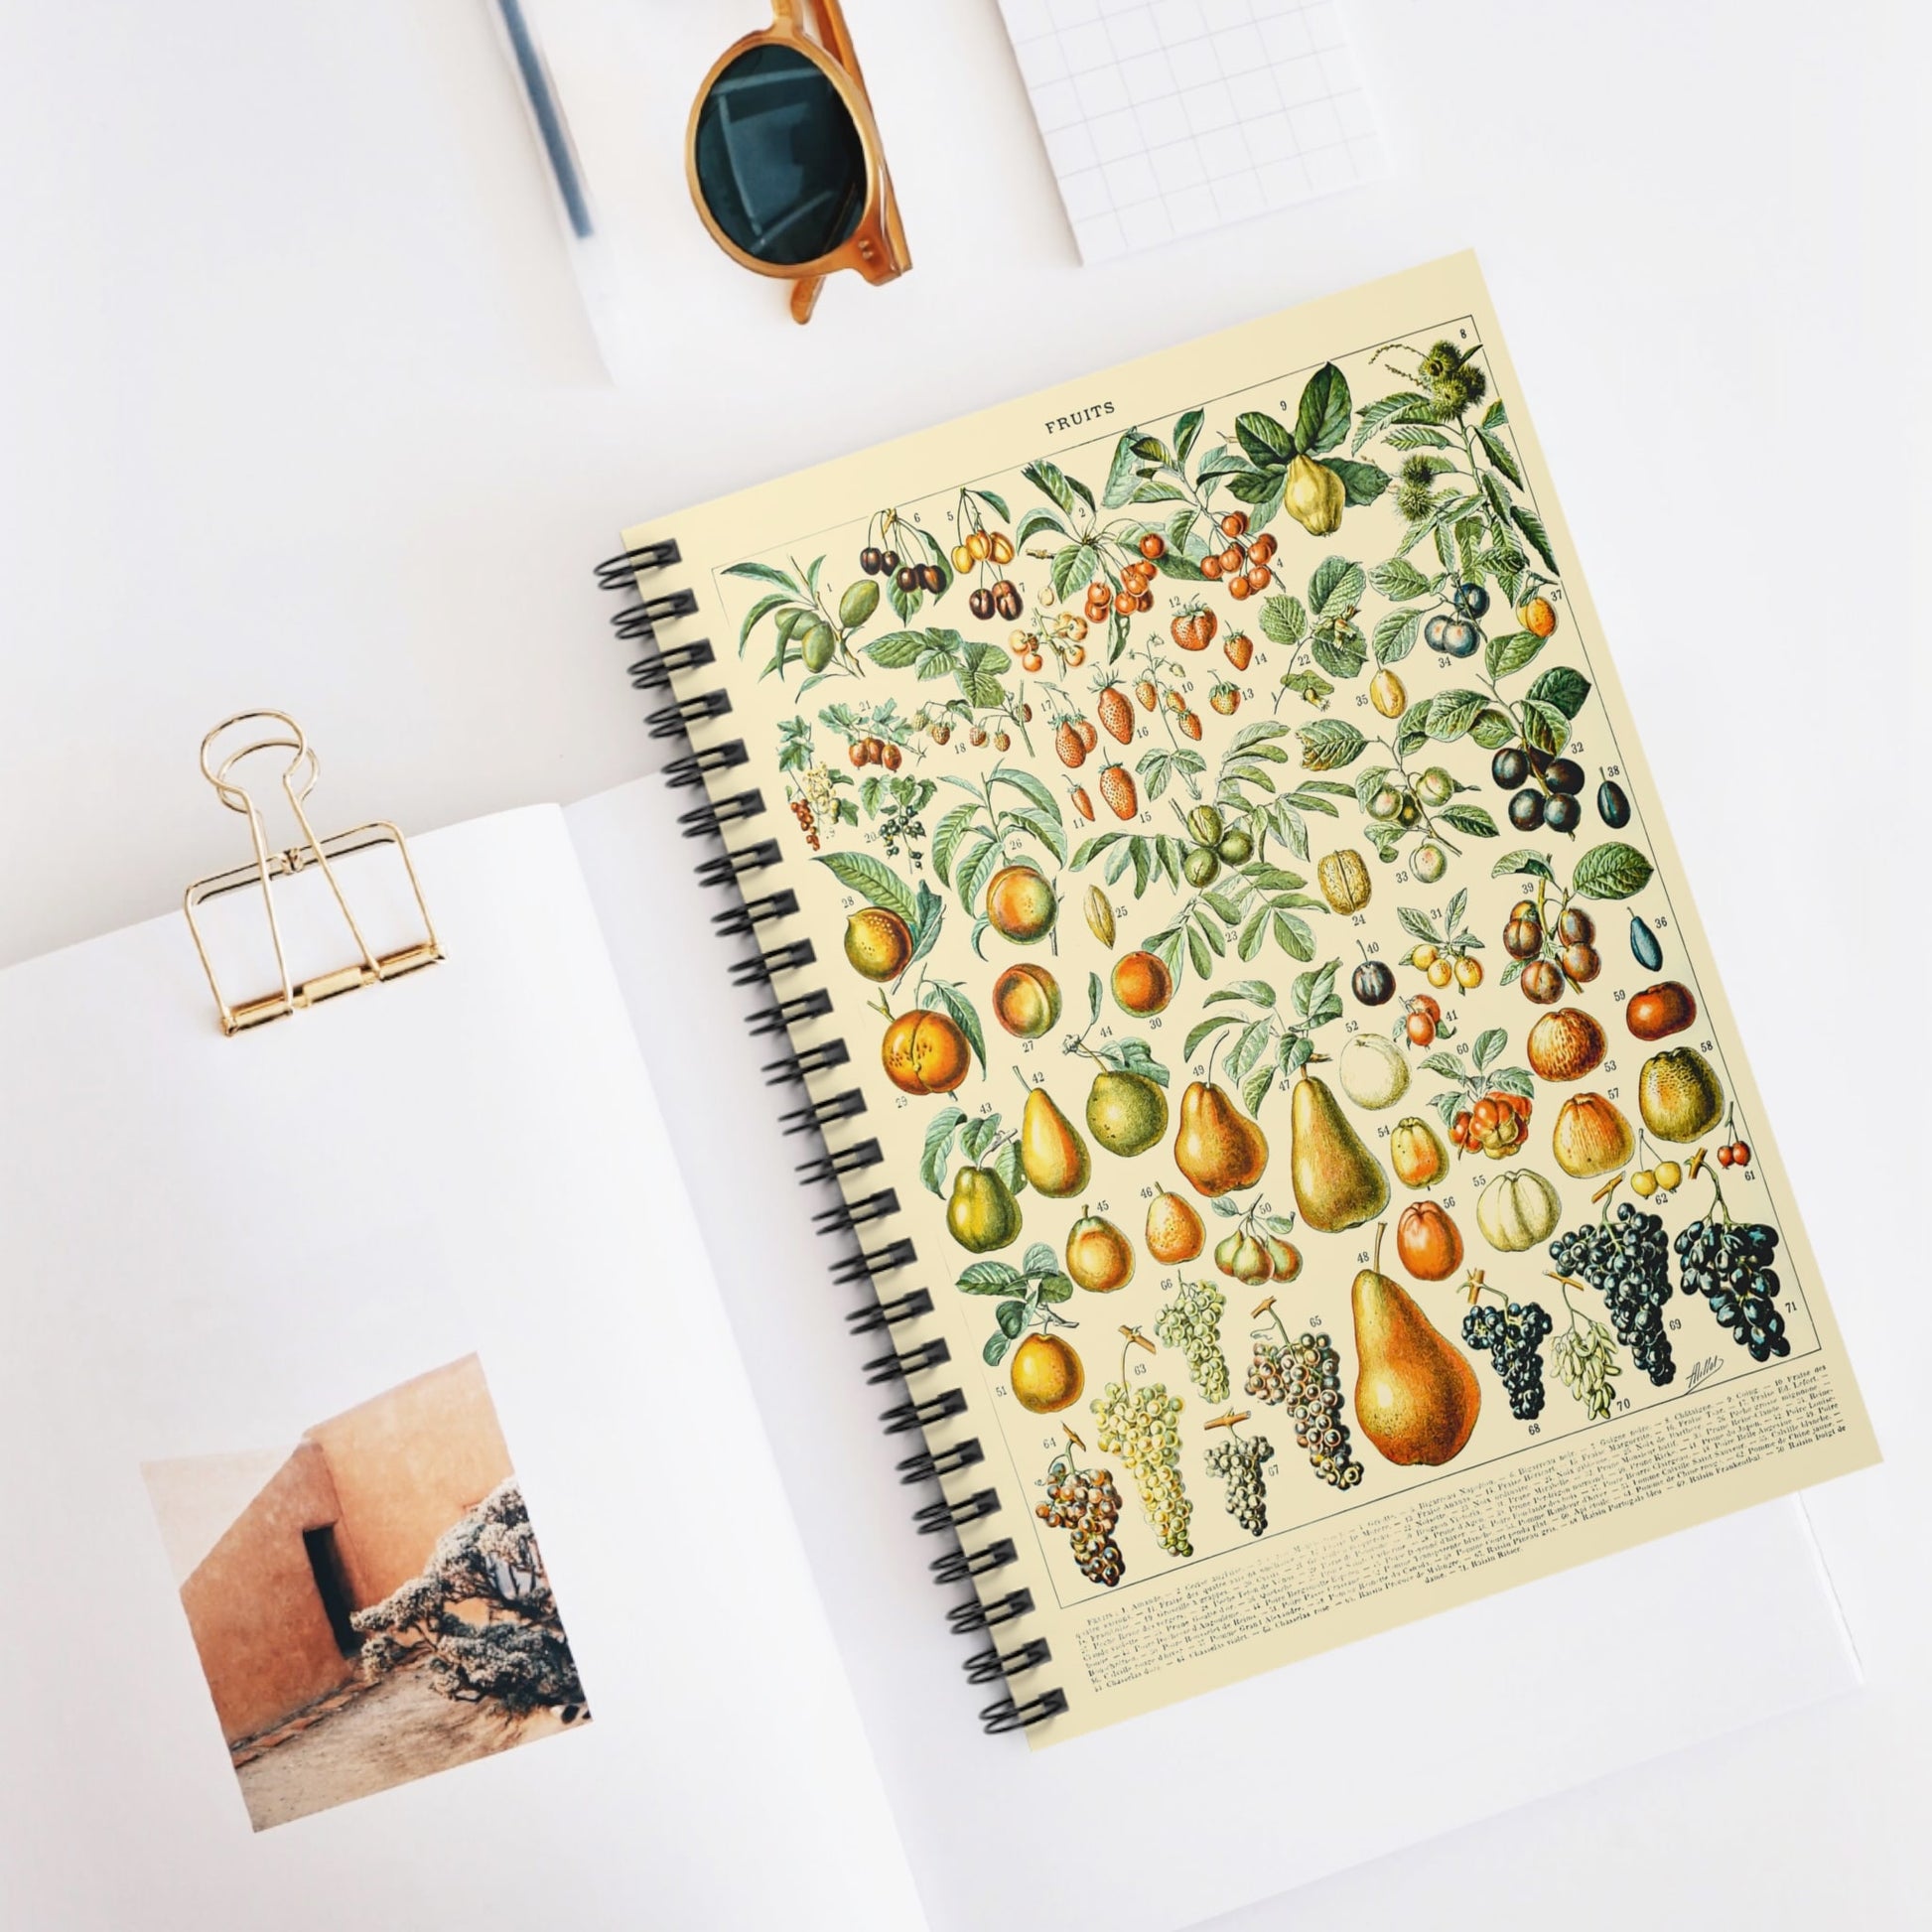 All Sorts of Fruits Spiral Notebook Displayed on Desk